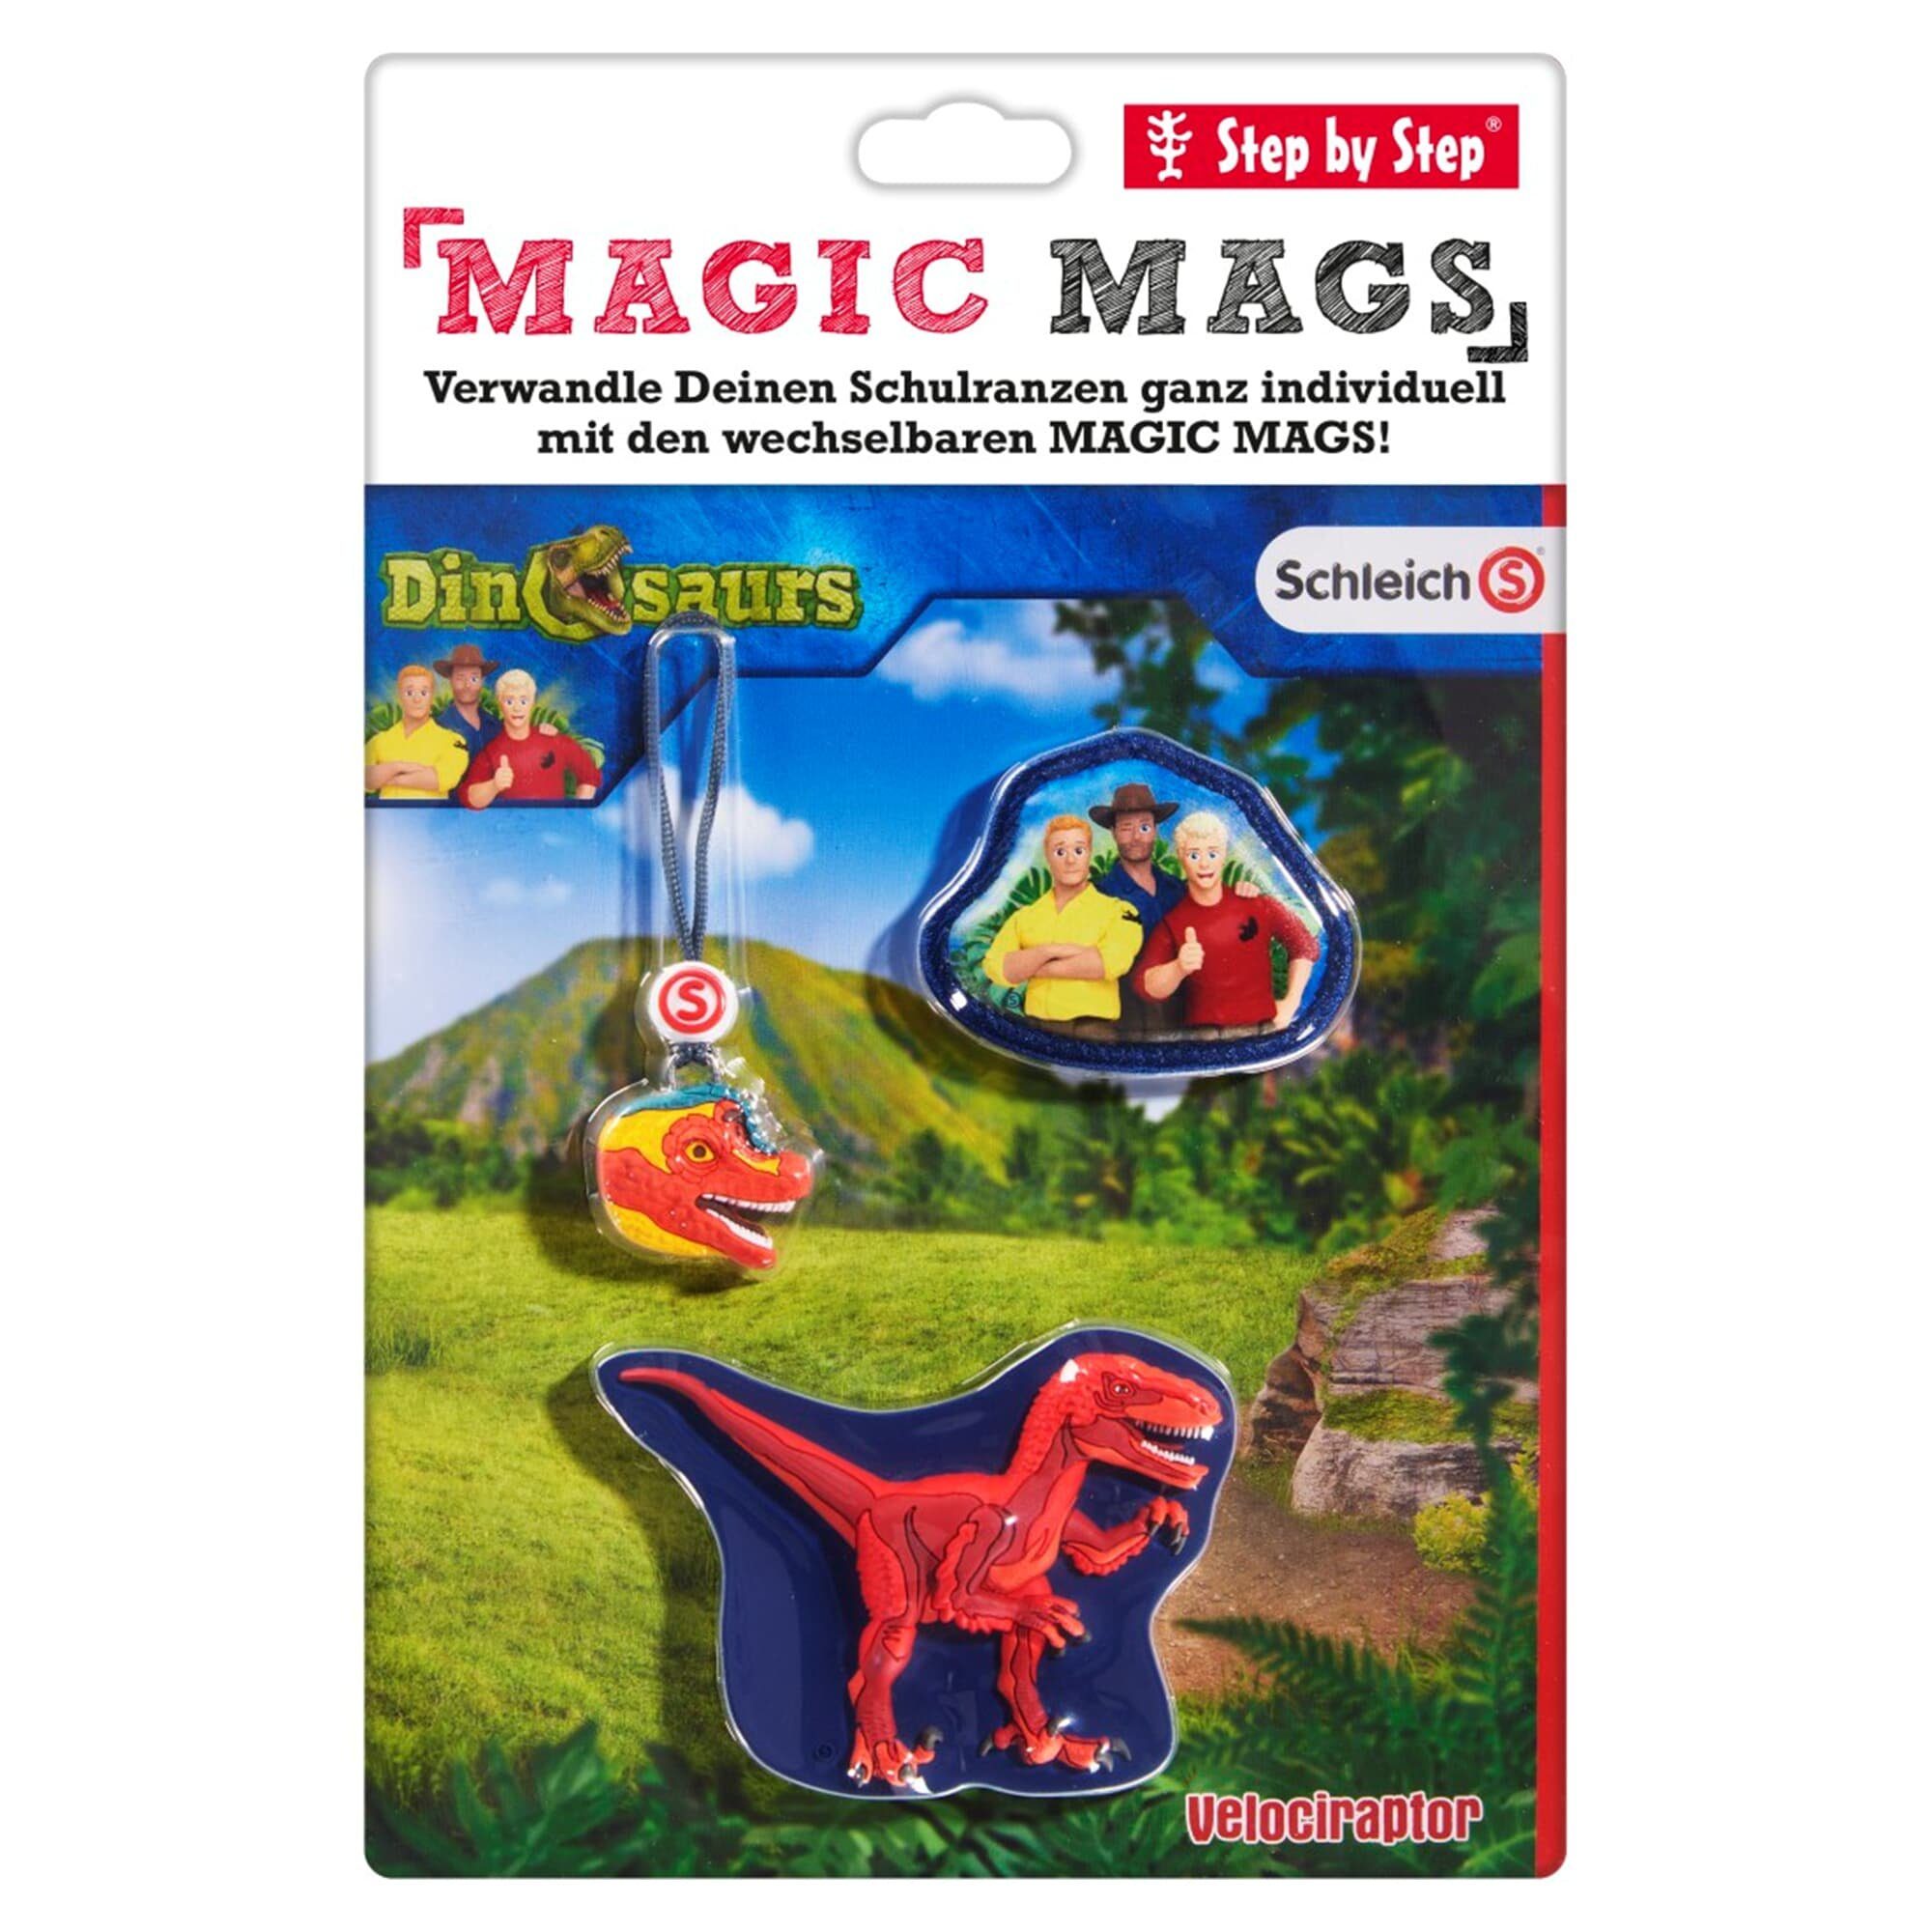 Step by Step Schulranzen MAGIC MAGS Dinosaurs, Velociraptor